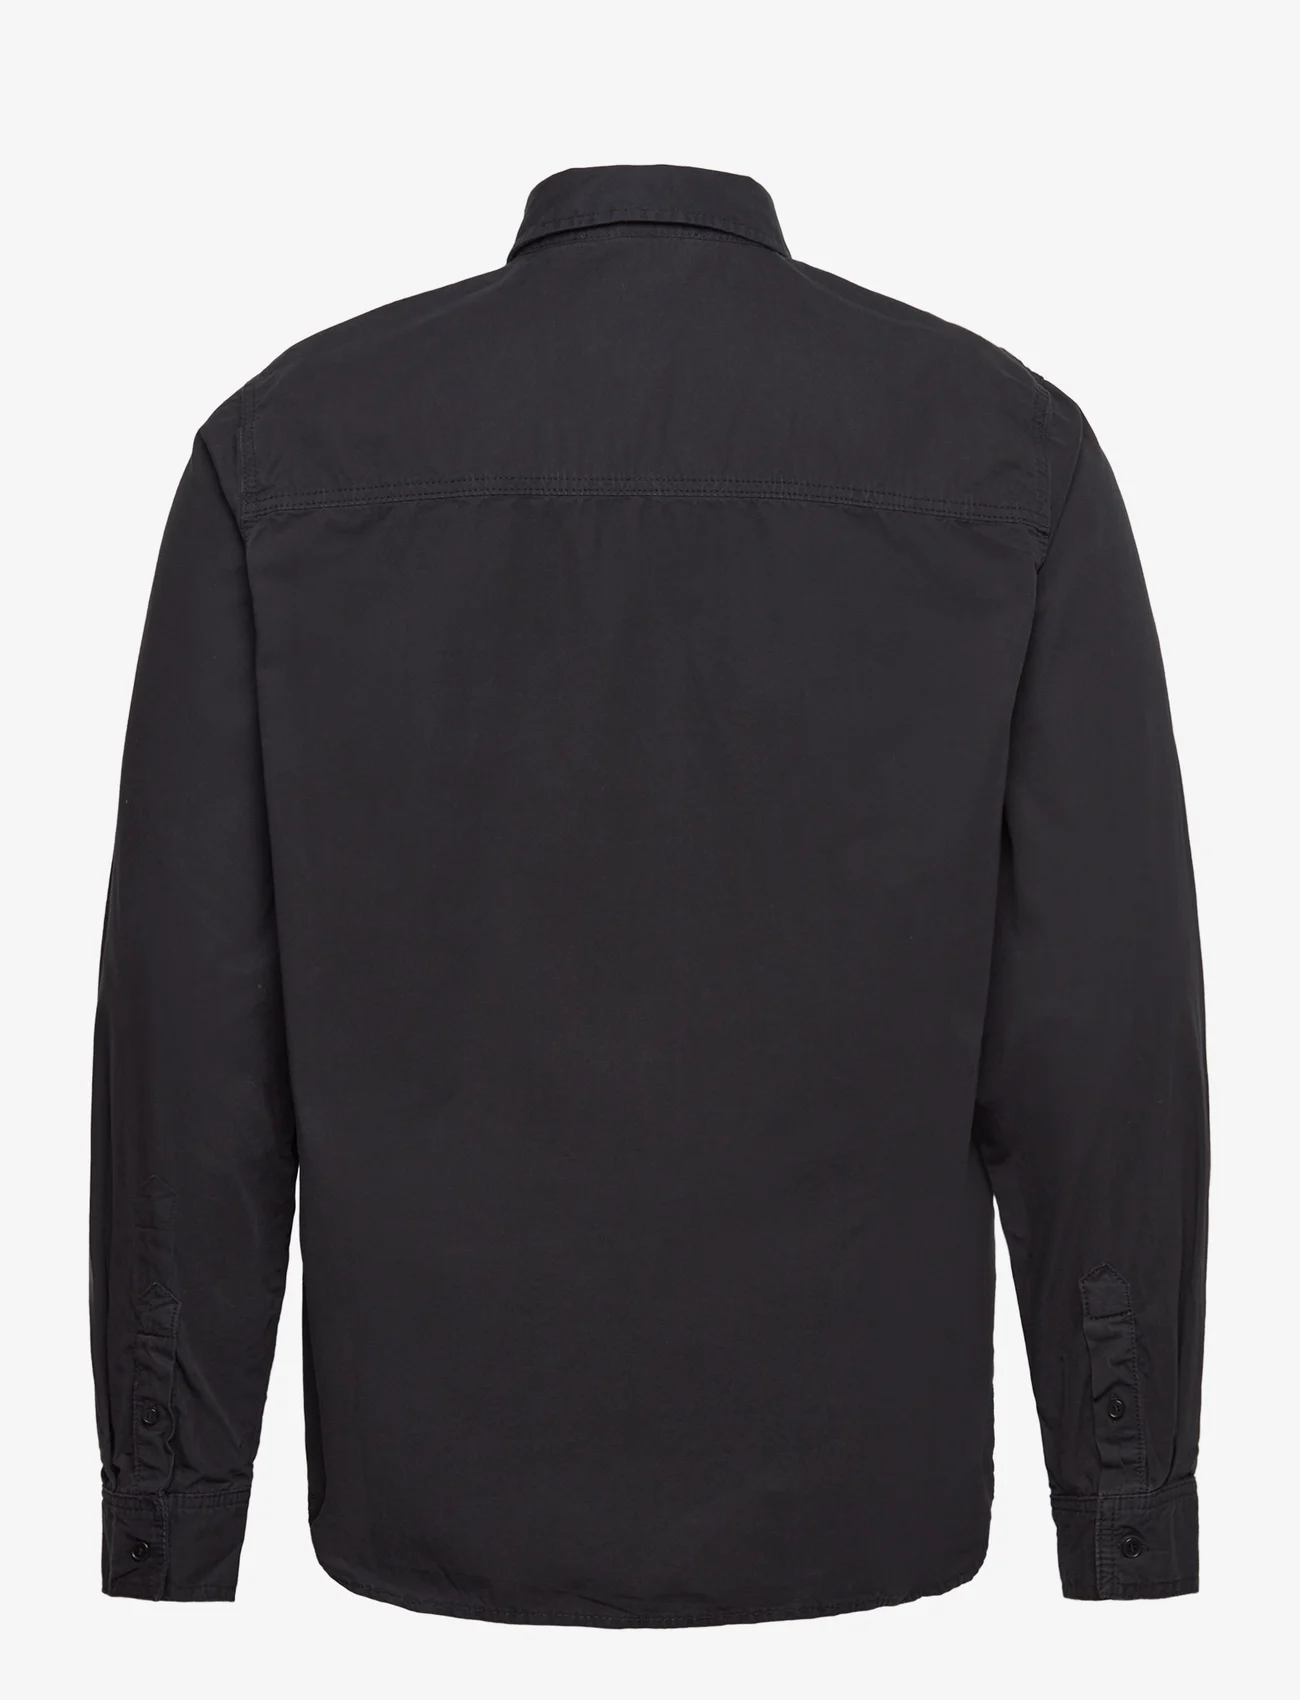 Wood Wood - Aster Shirt - basic skjortor - black - 1